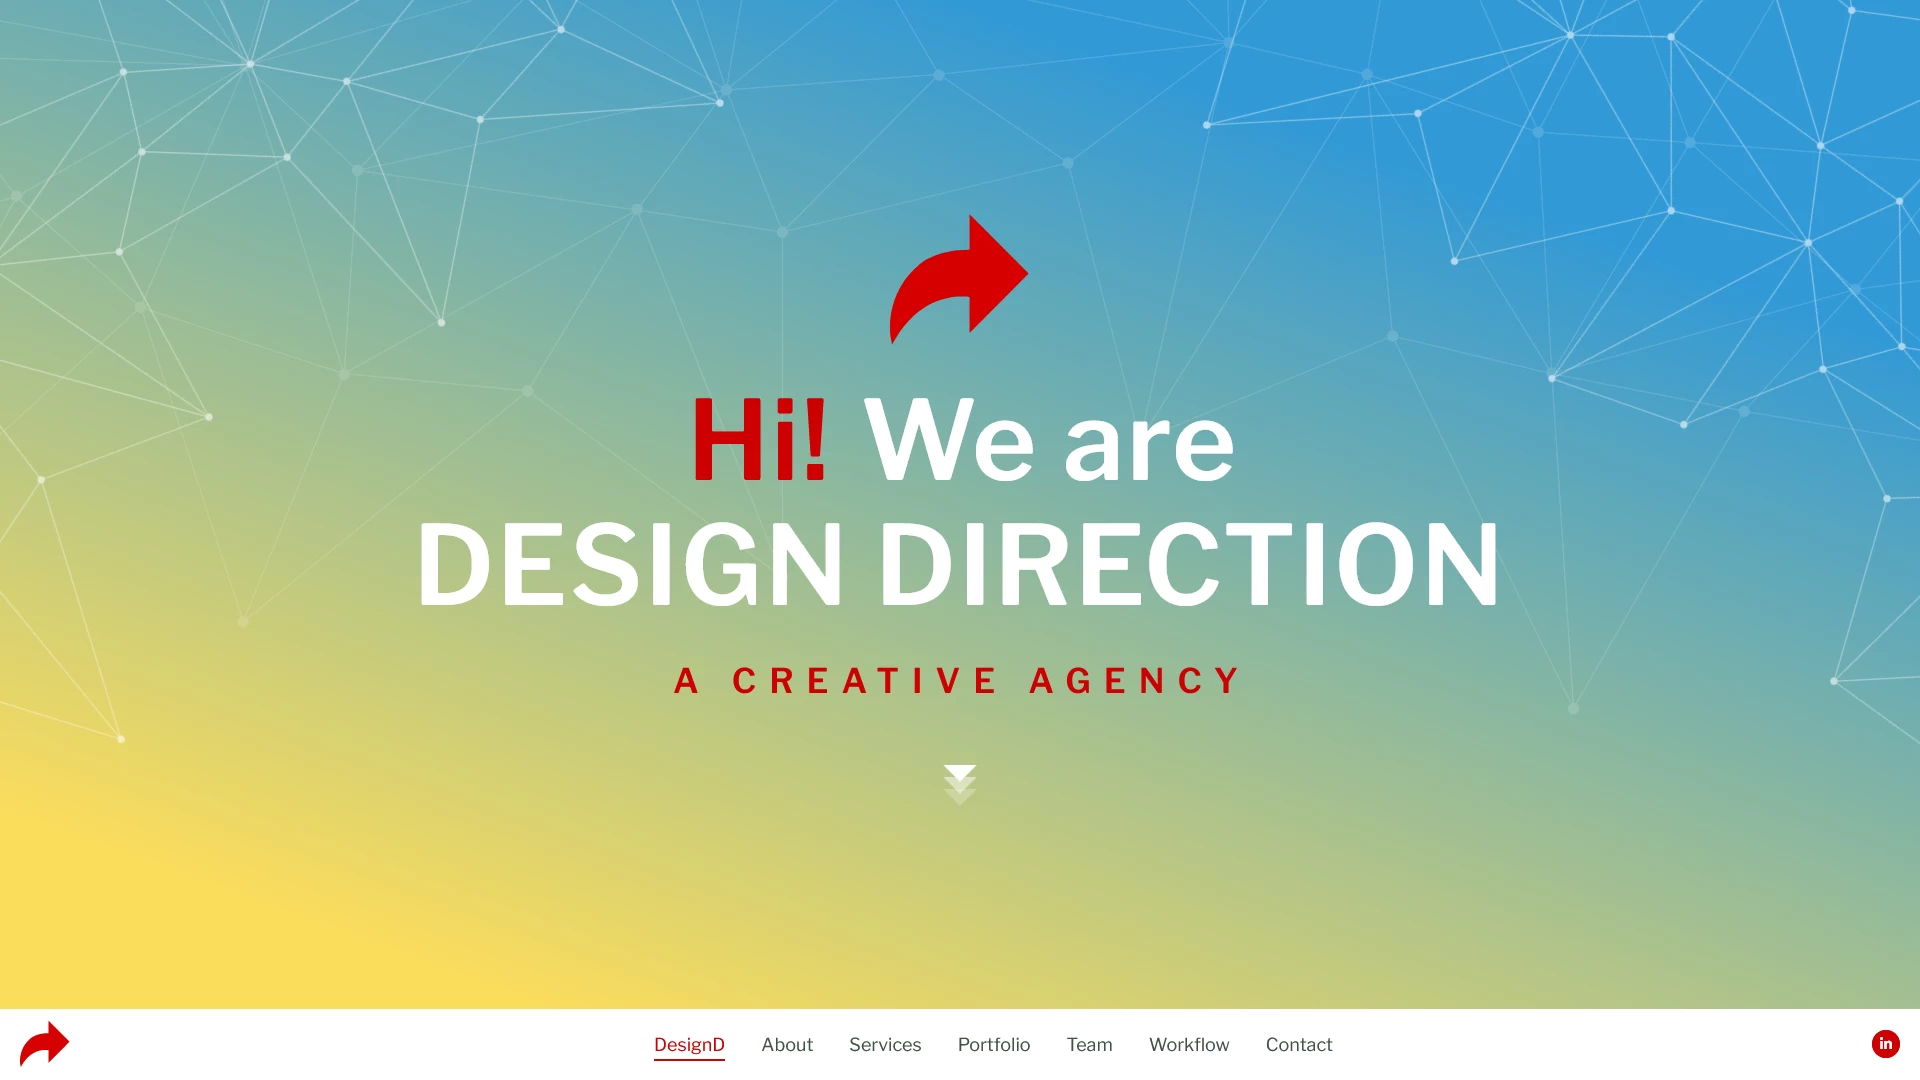 Design Direction